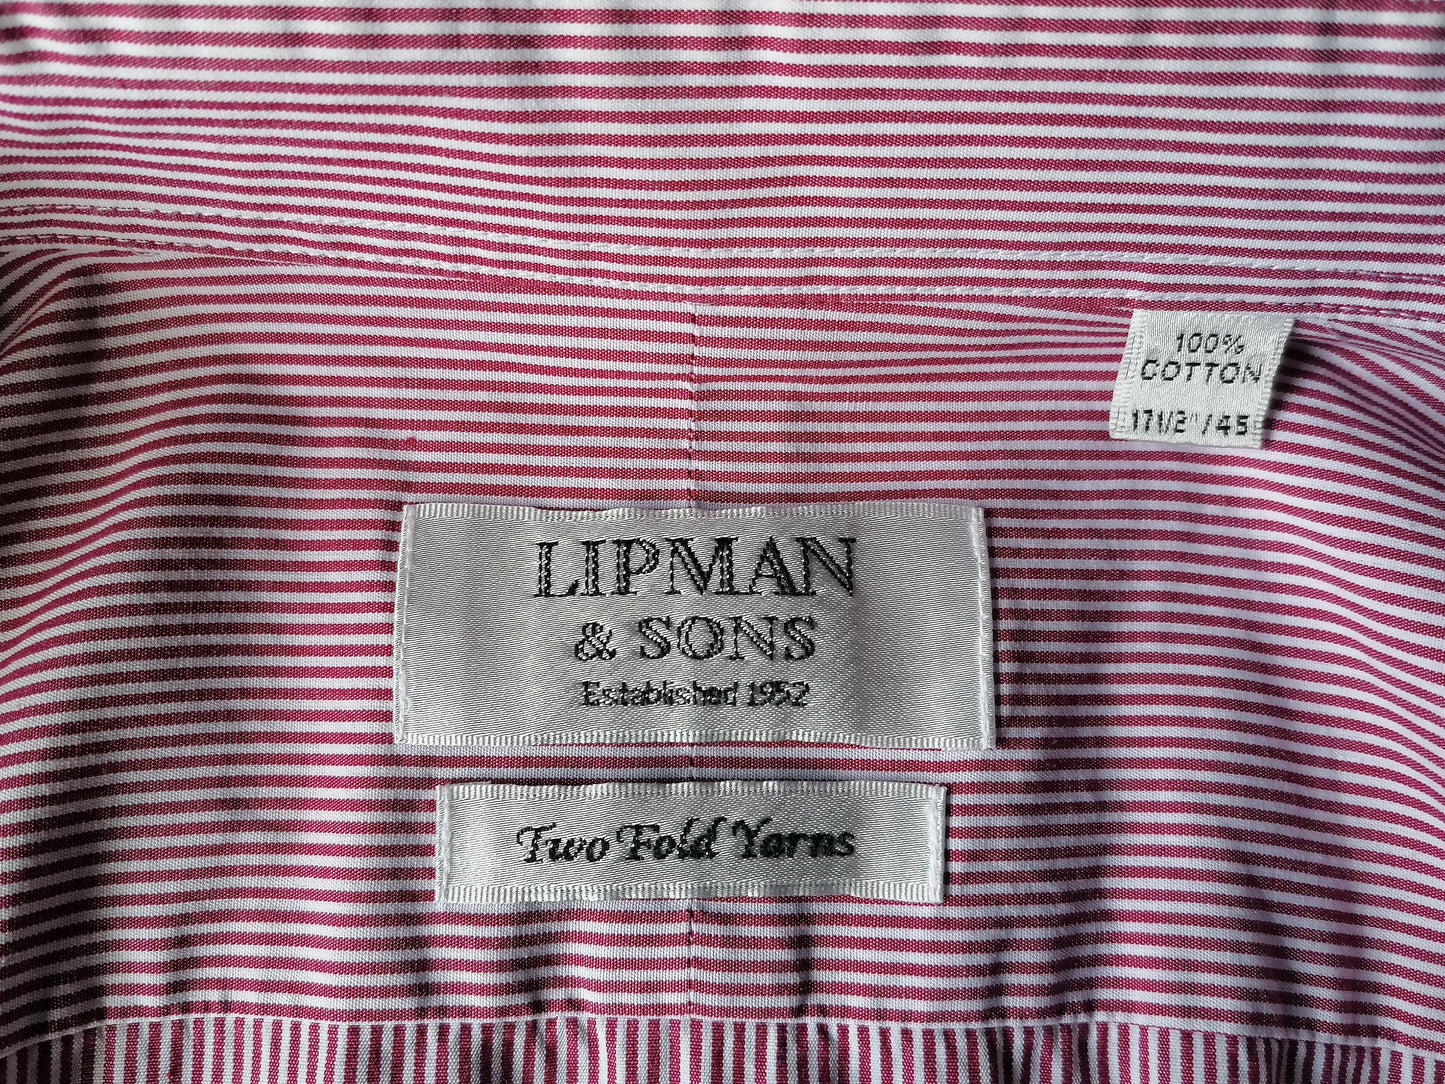 Lipman & Sons shirt. Red white striped. Size 45 / XXL / 2XL. Type of cuff knot. "Two Fold Yarn".